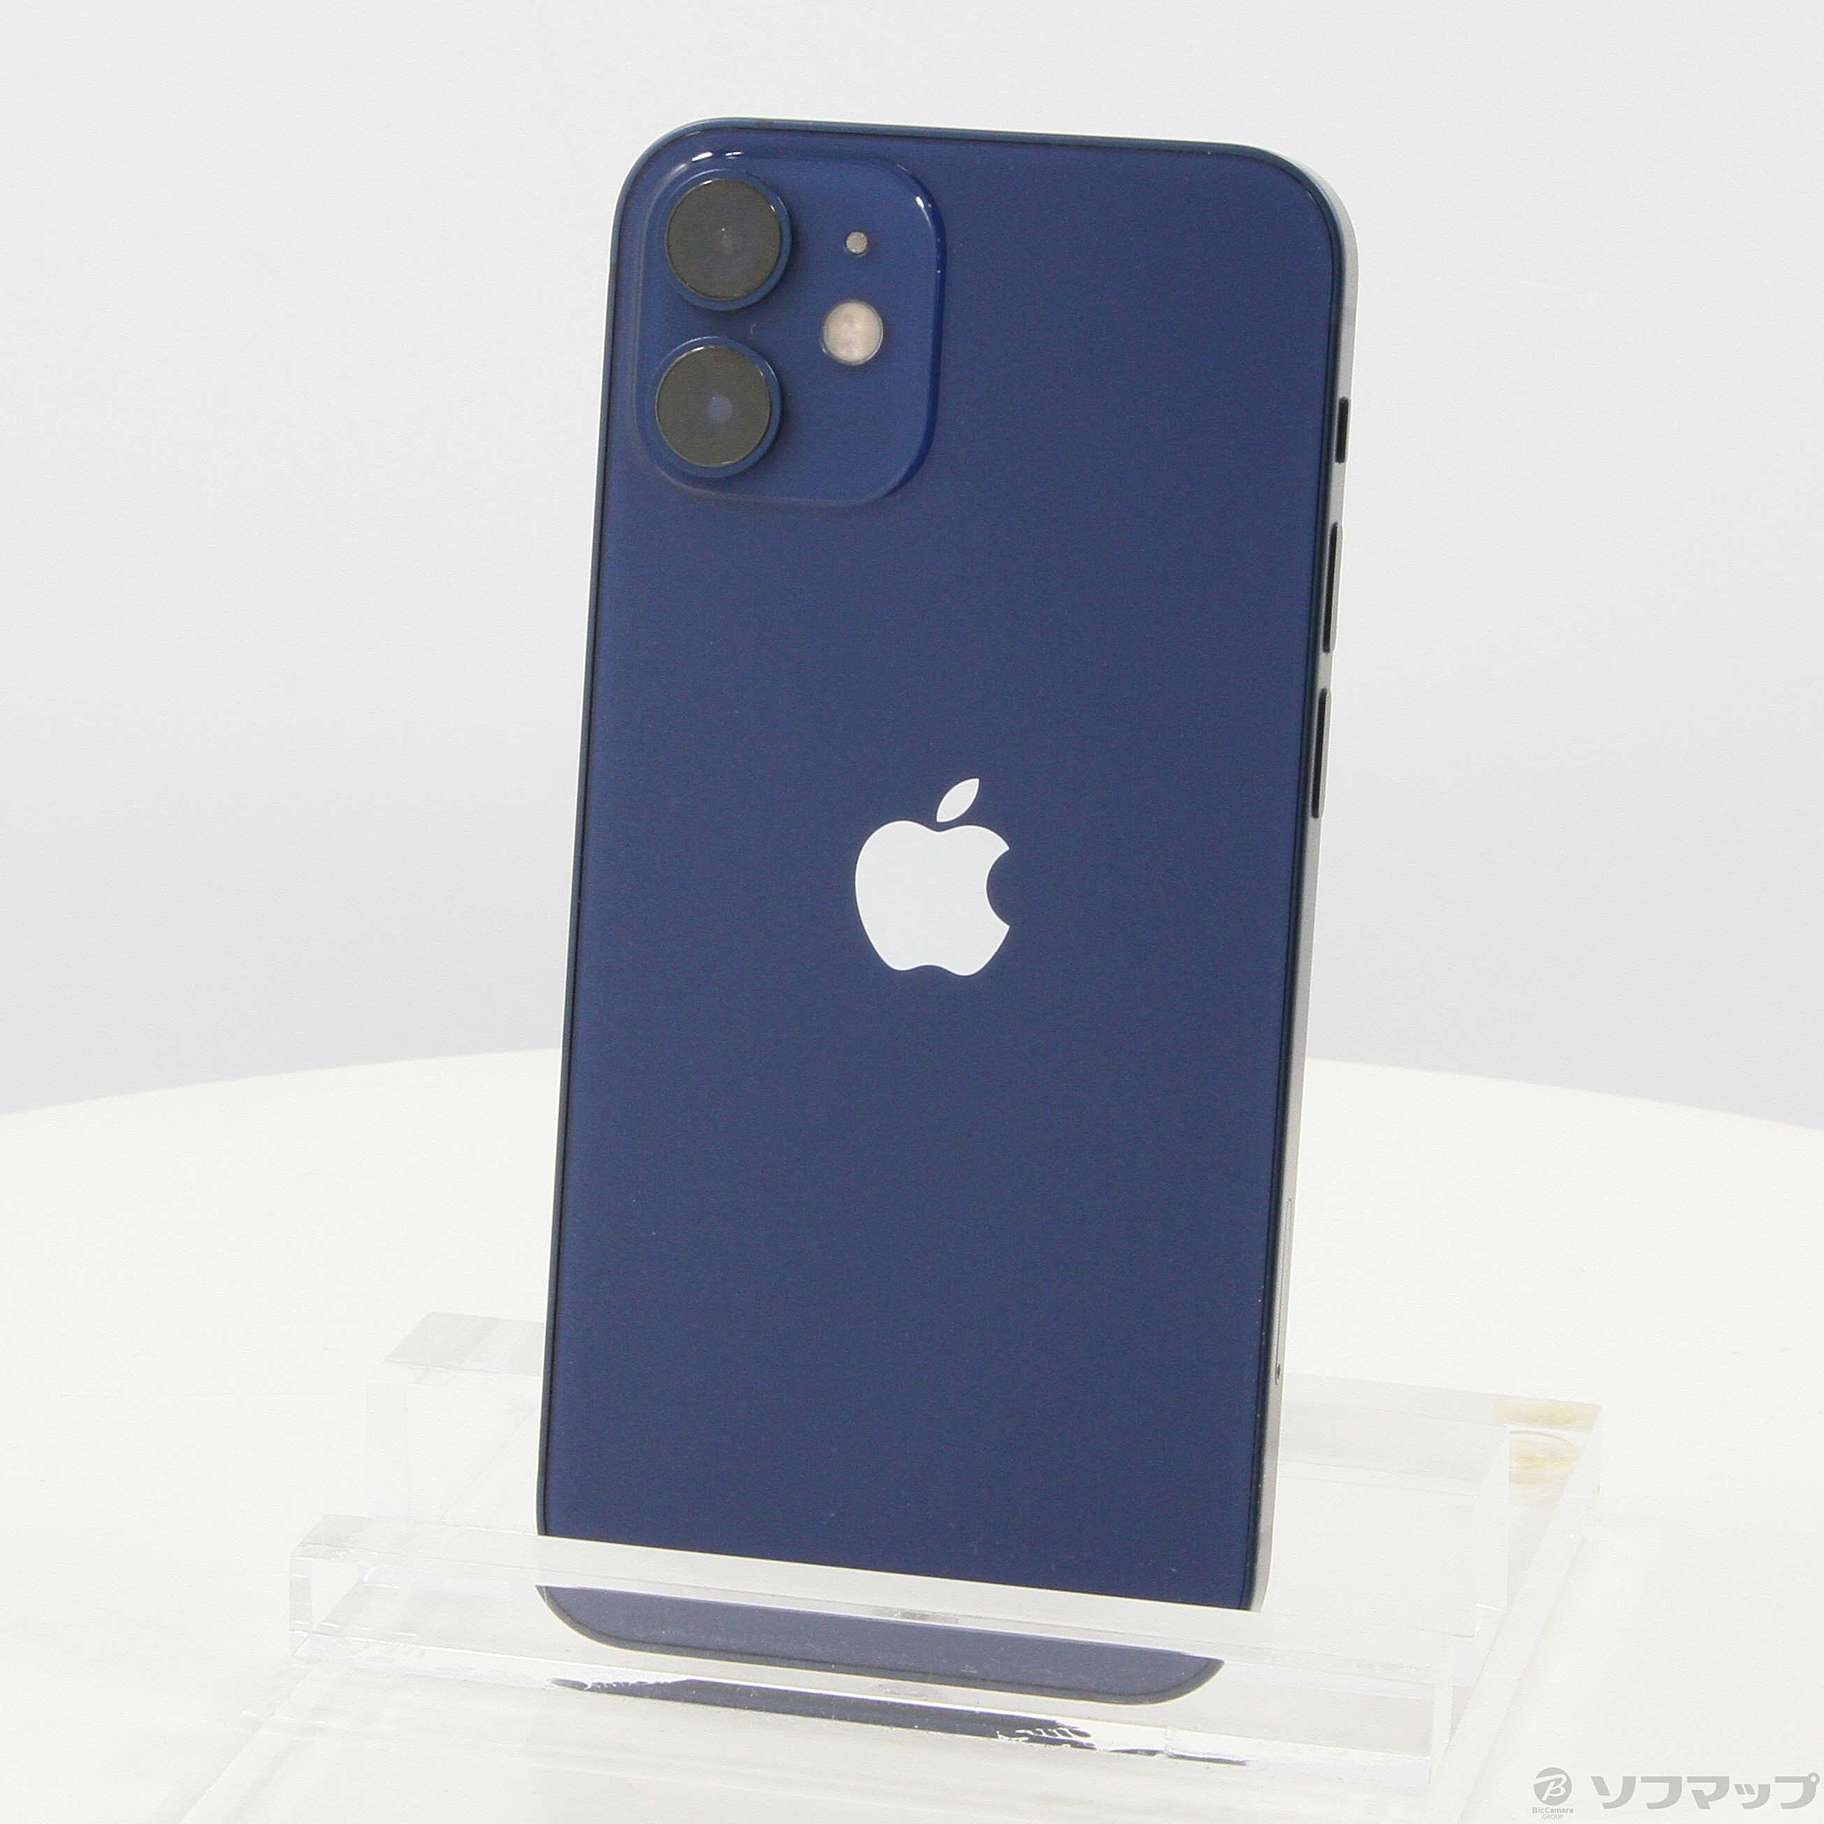 【新品未使用】iPhone12 mini 64GB BLUE 本体 SIMフリー